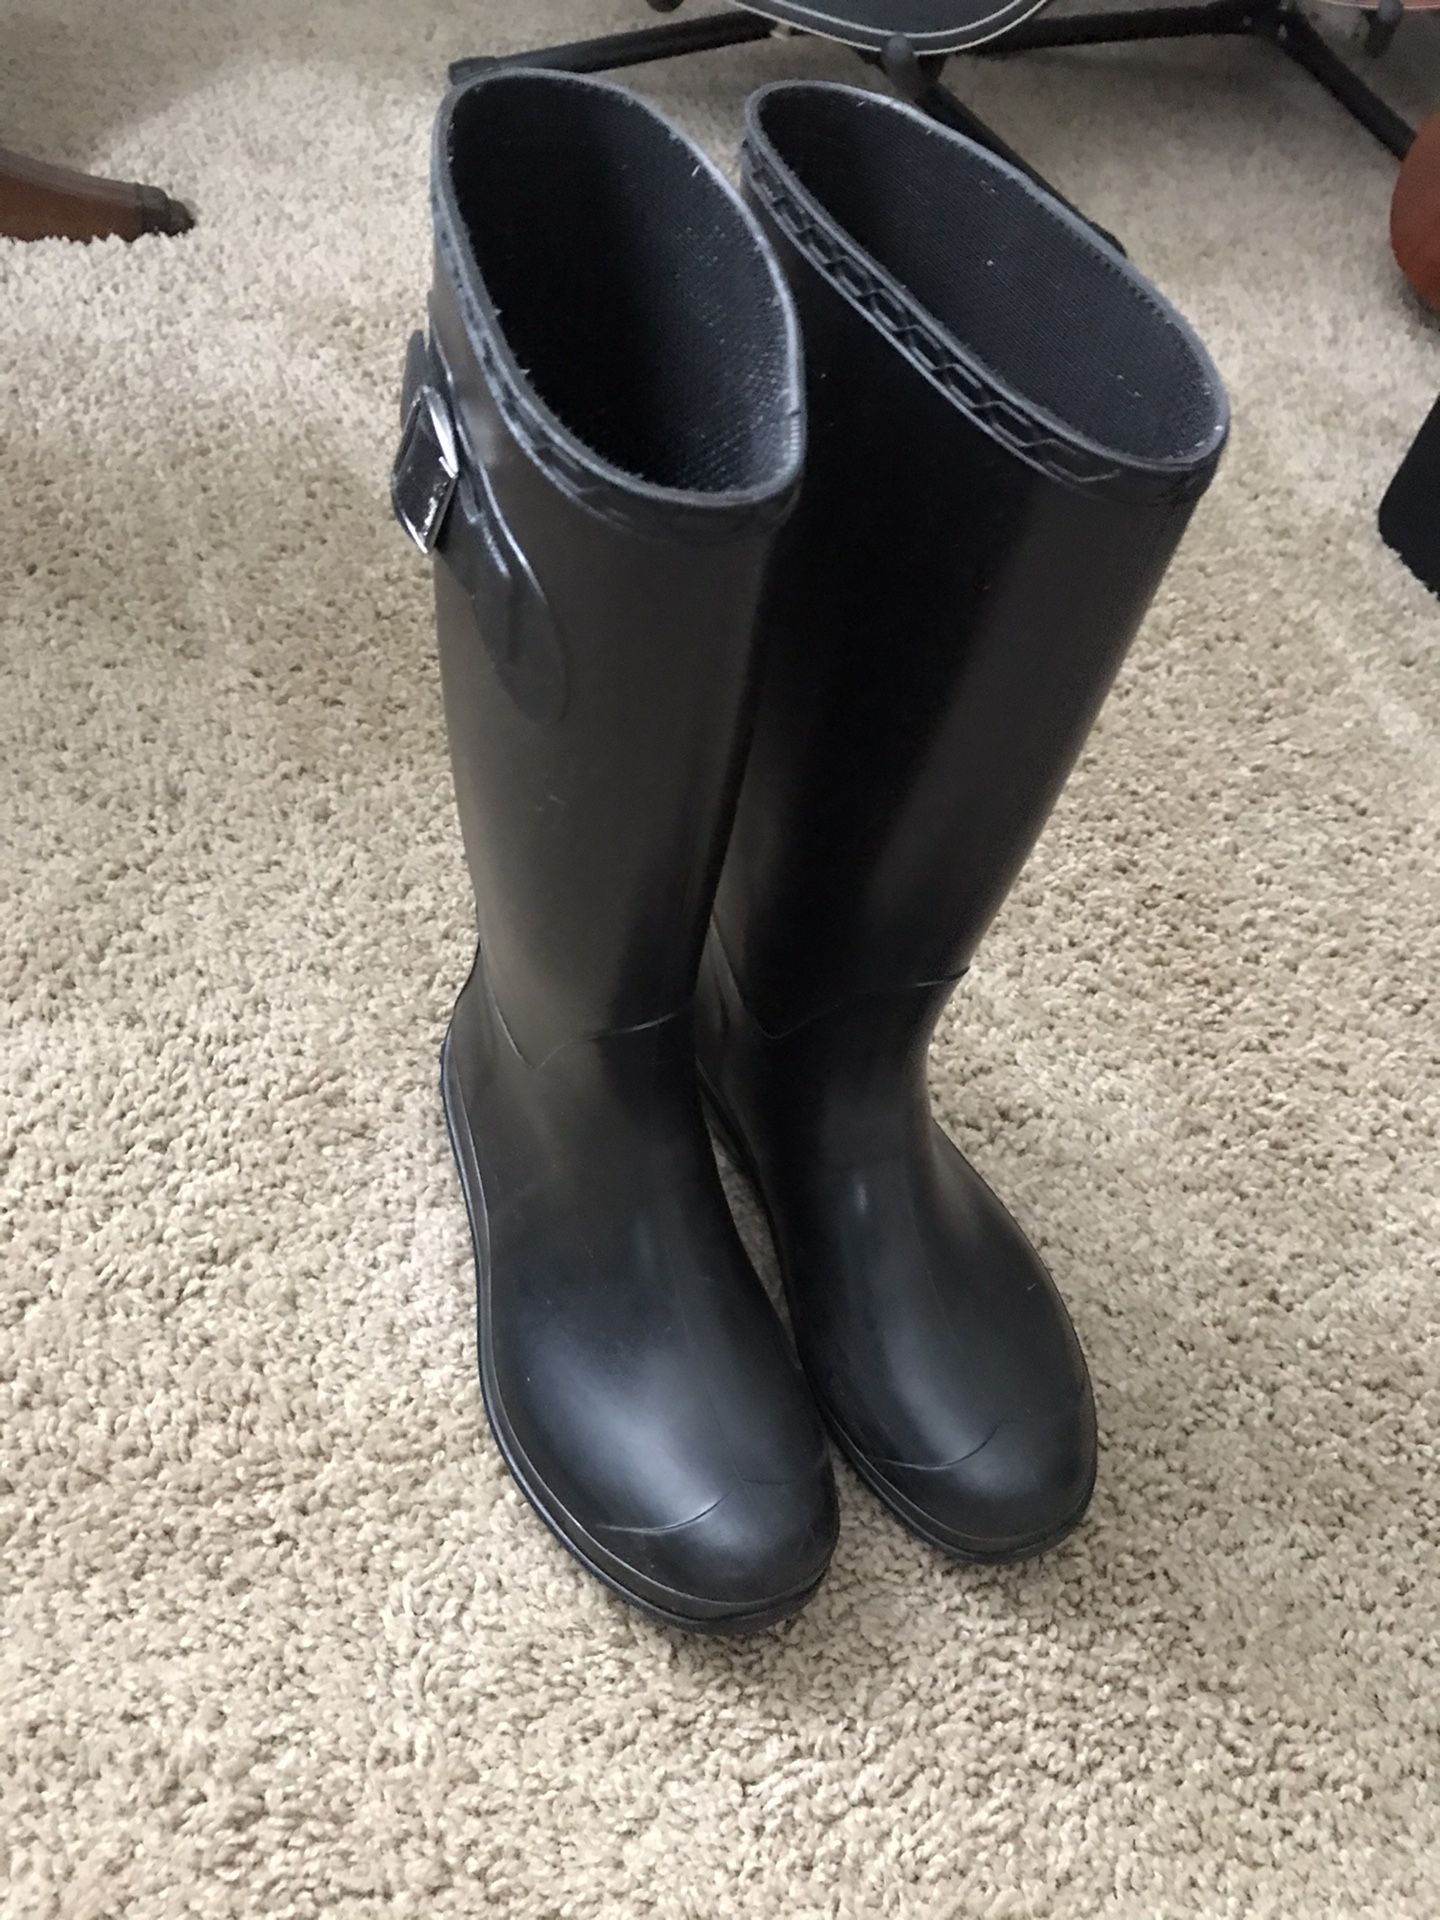 Rain boots- women’s size 6